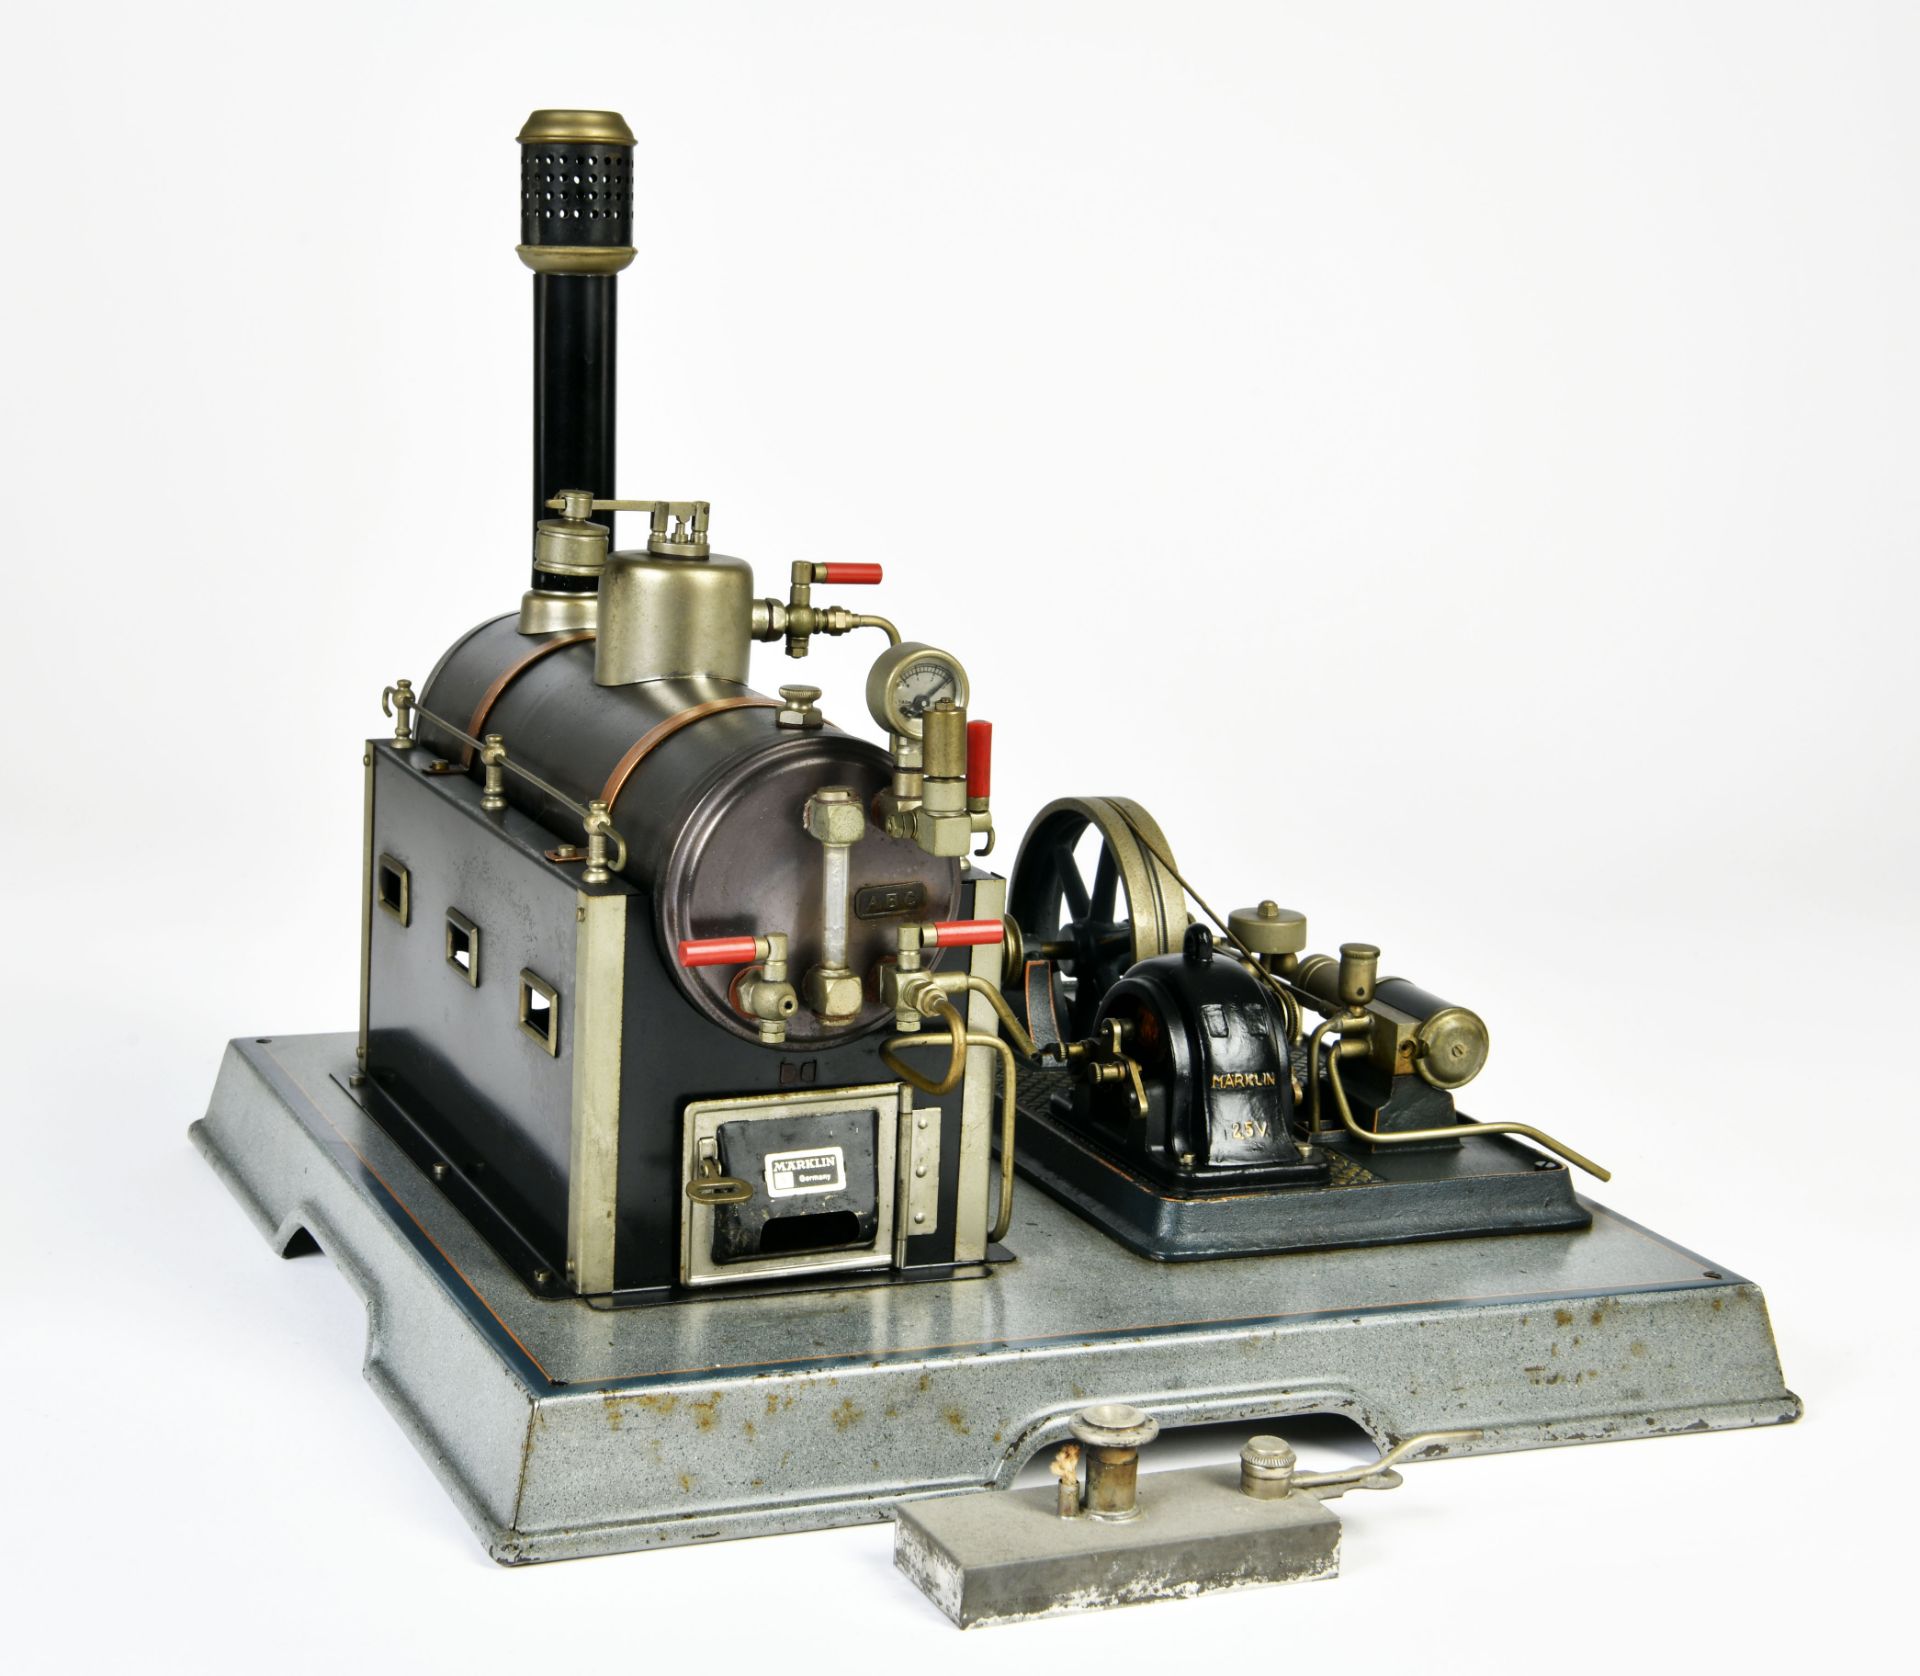 Märklin, steam engine with dynamo, Germany pw, base 37,5x37,5cm, boiler 27cm, good condition - Image 3 of 3